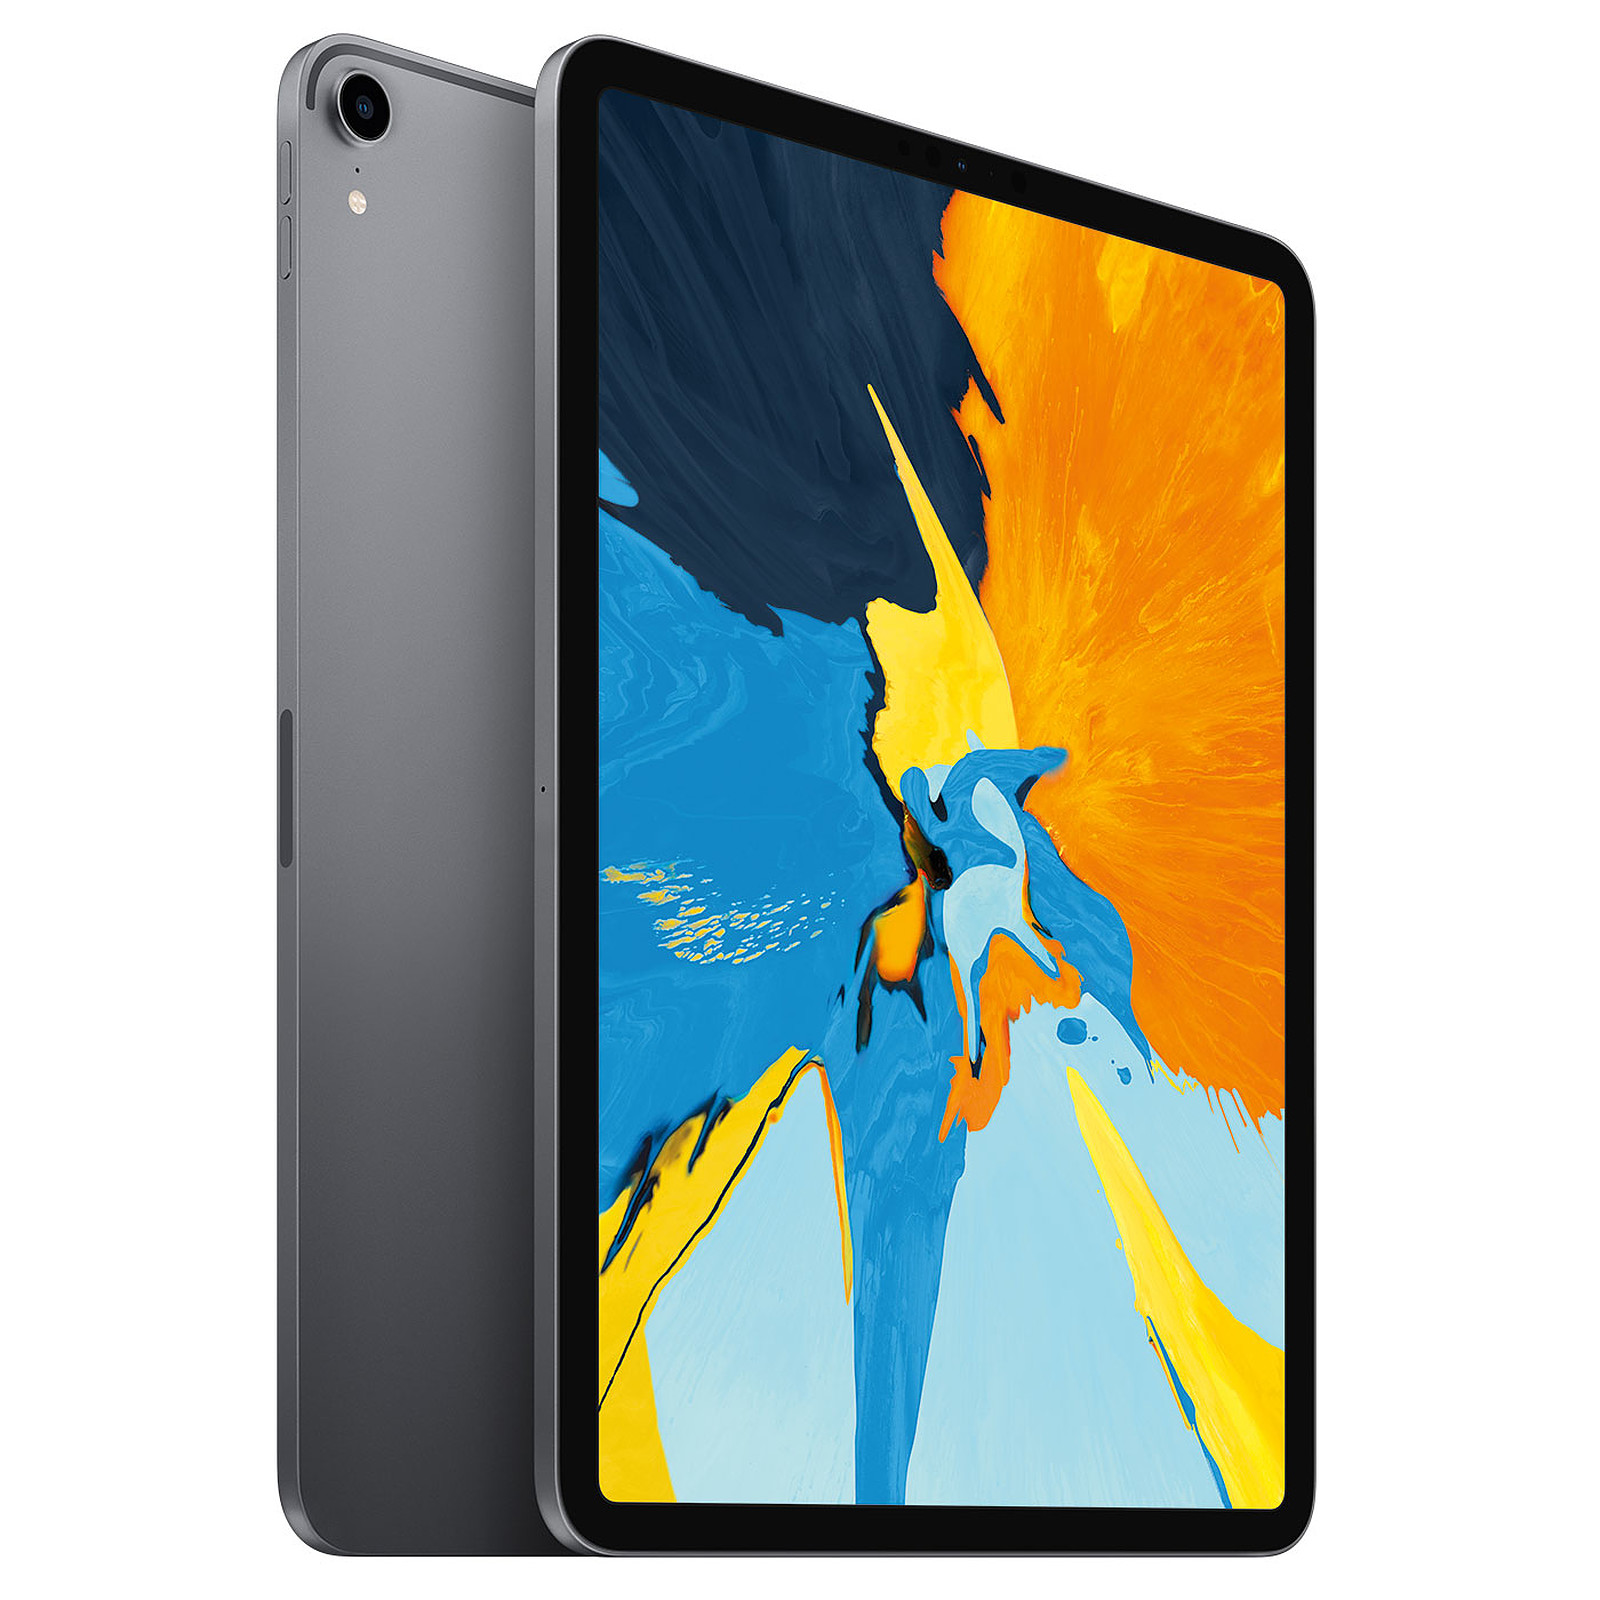 Apple iPad Pro 11-inch Wi-Fi + LTE 64GB Space Gray (2018)